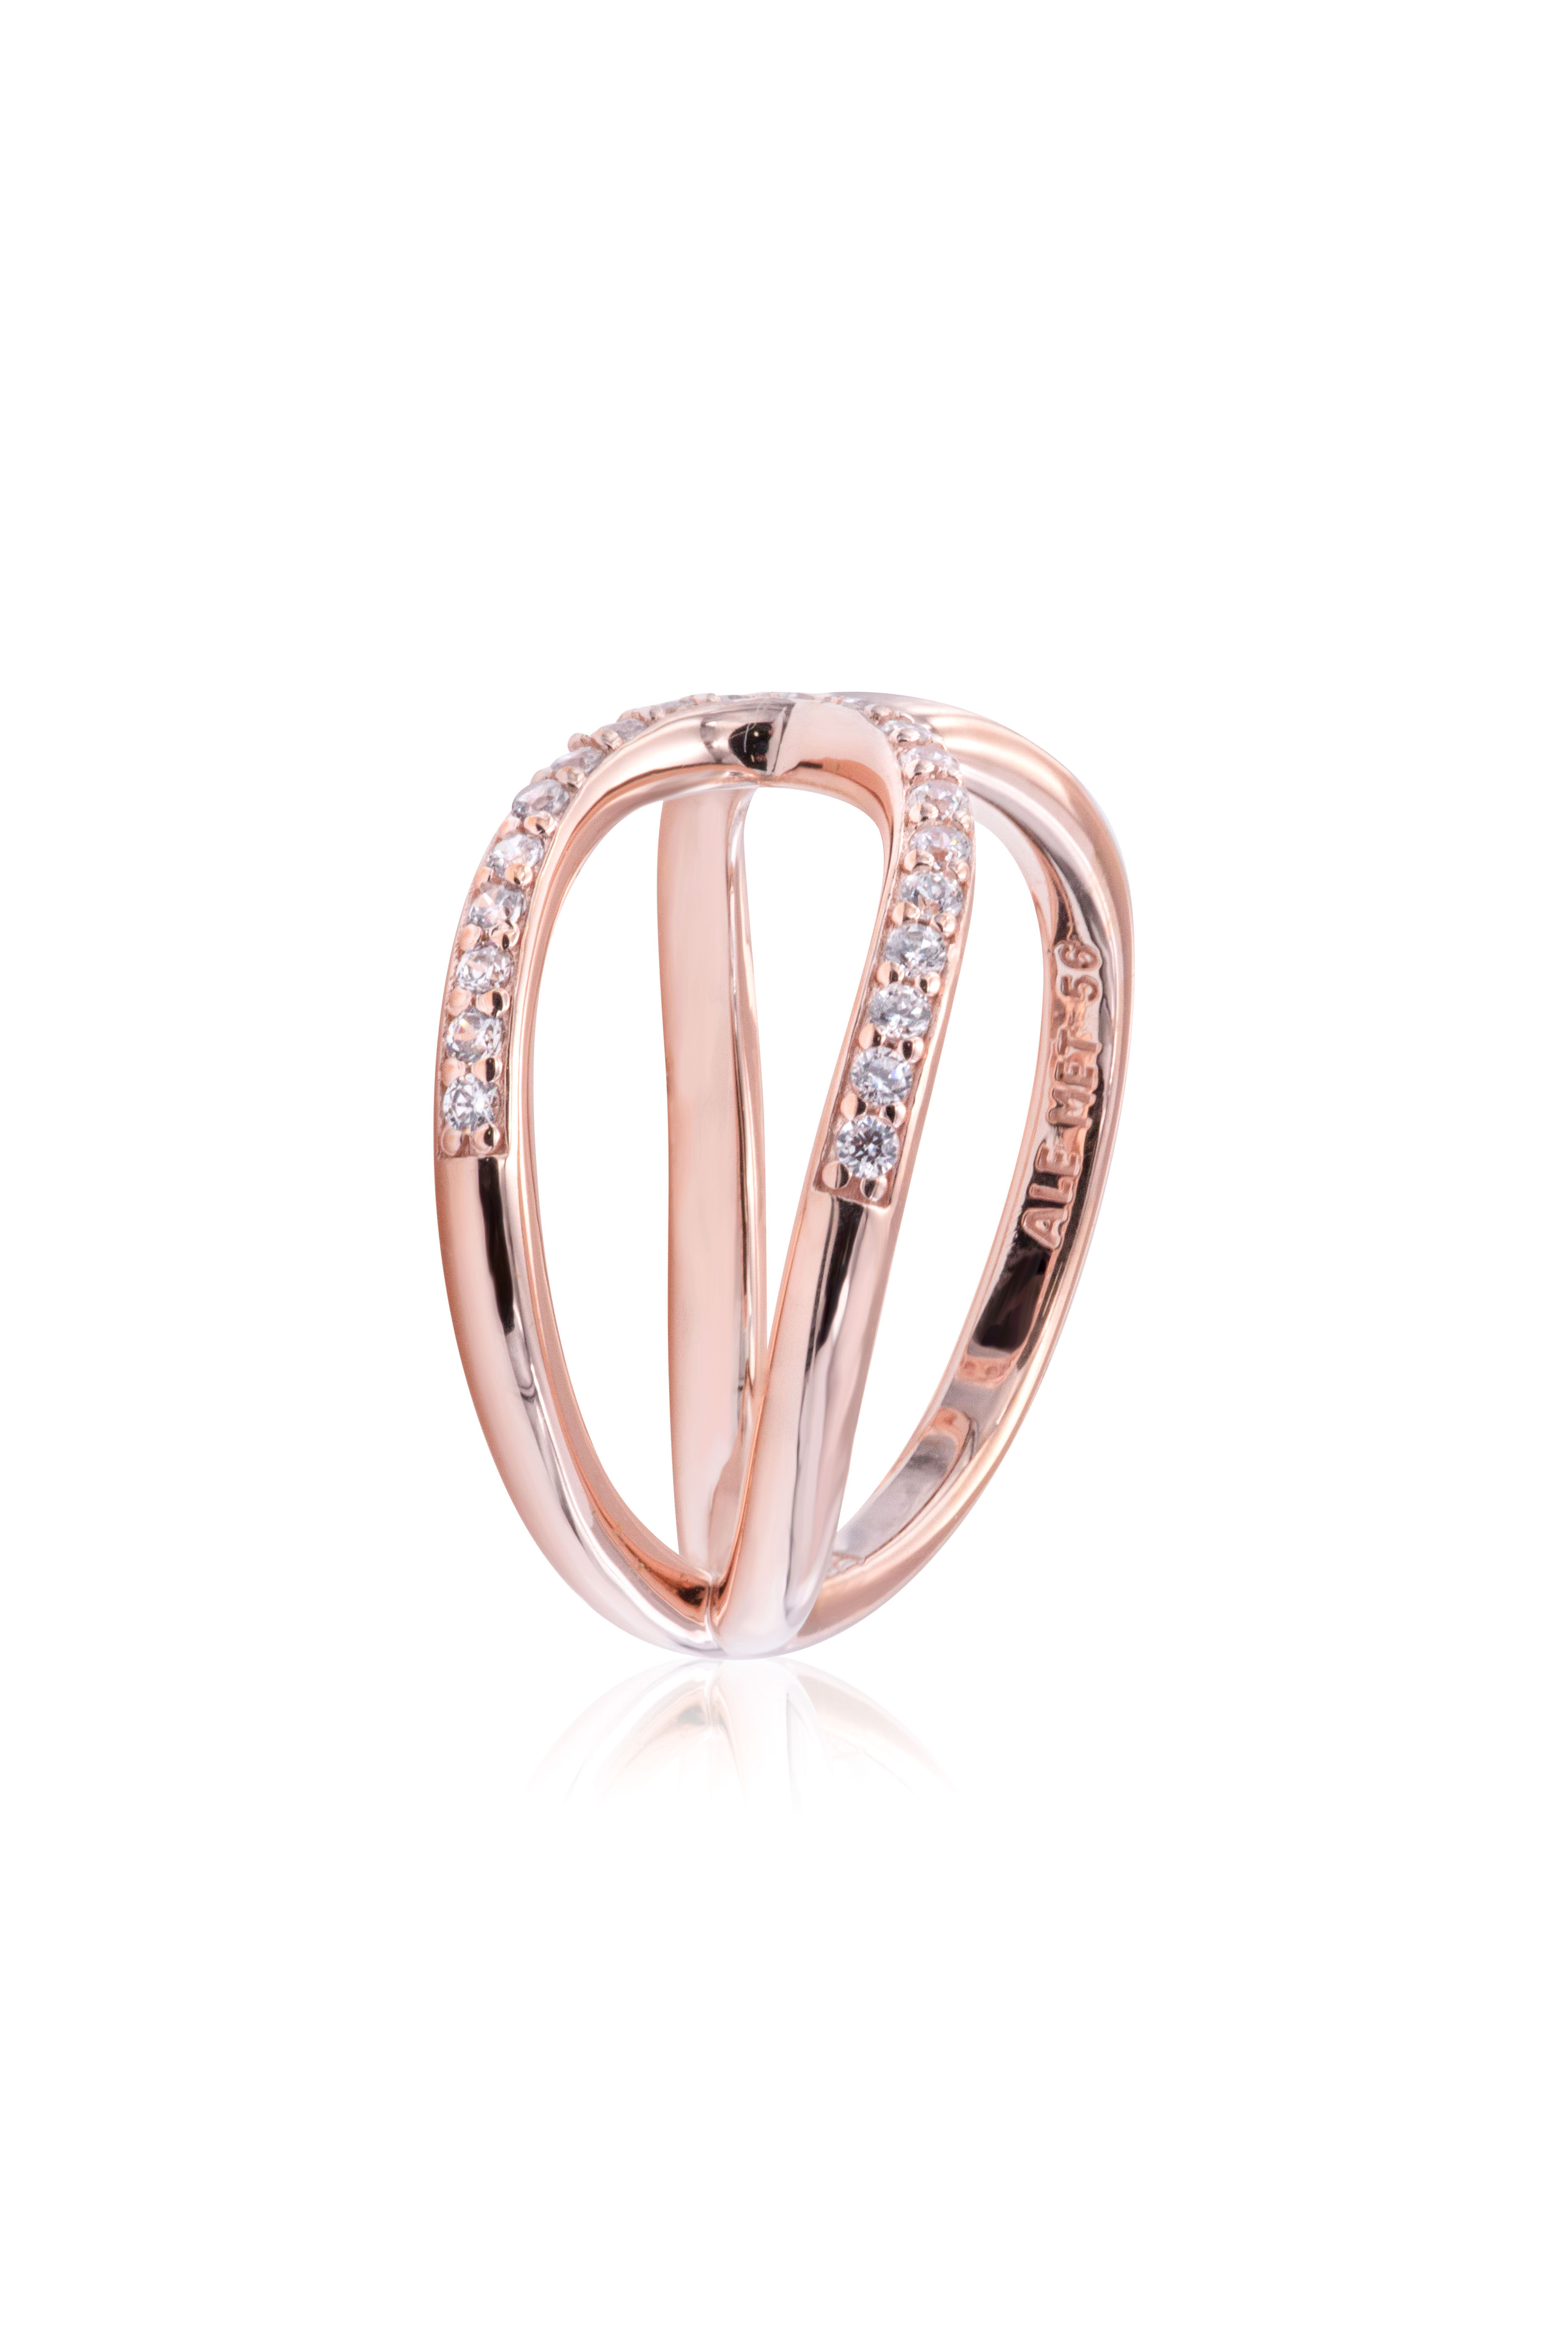 Pandora Wrapped Open Infinity Ring Size 60 eBay